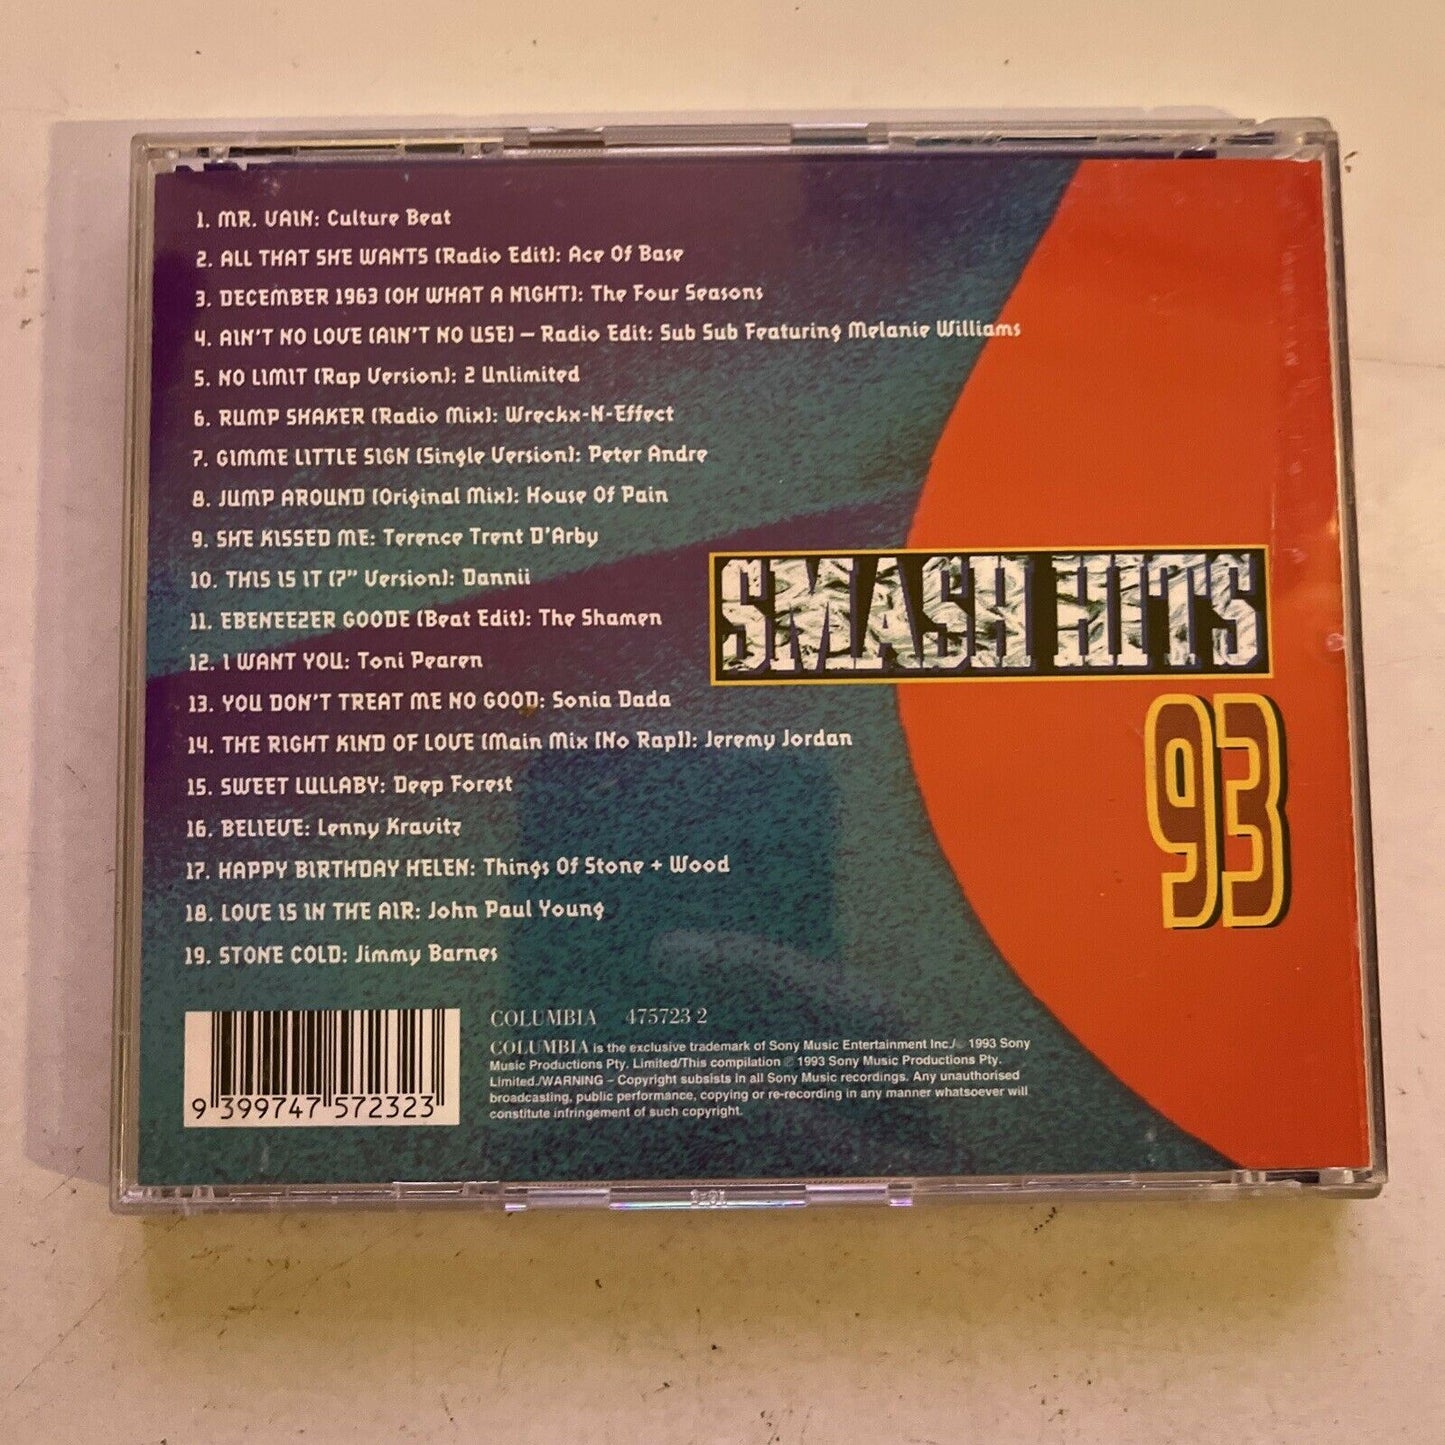 SMASH HITS 93 - 19 Original hits of 1993 (CD, Sony, 1993)